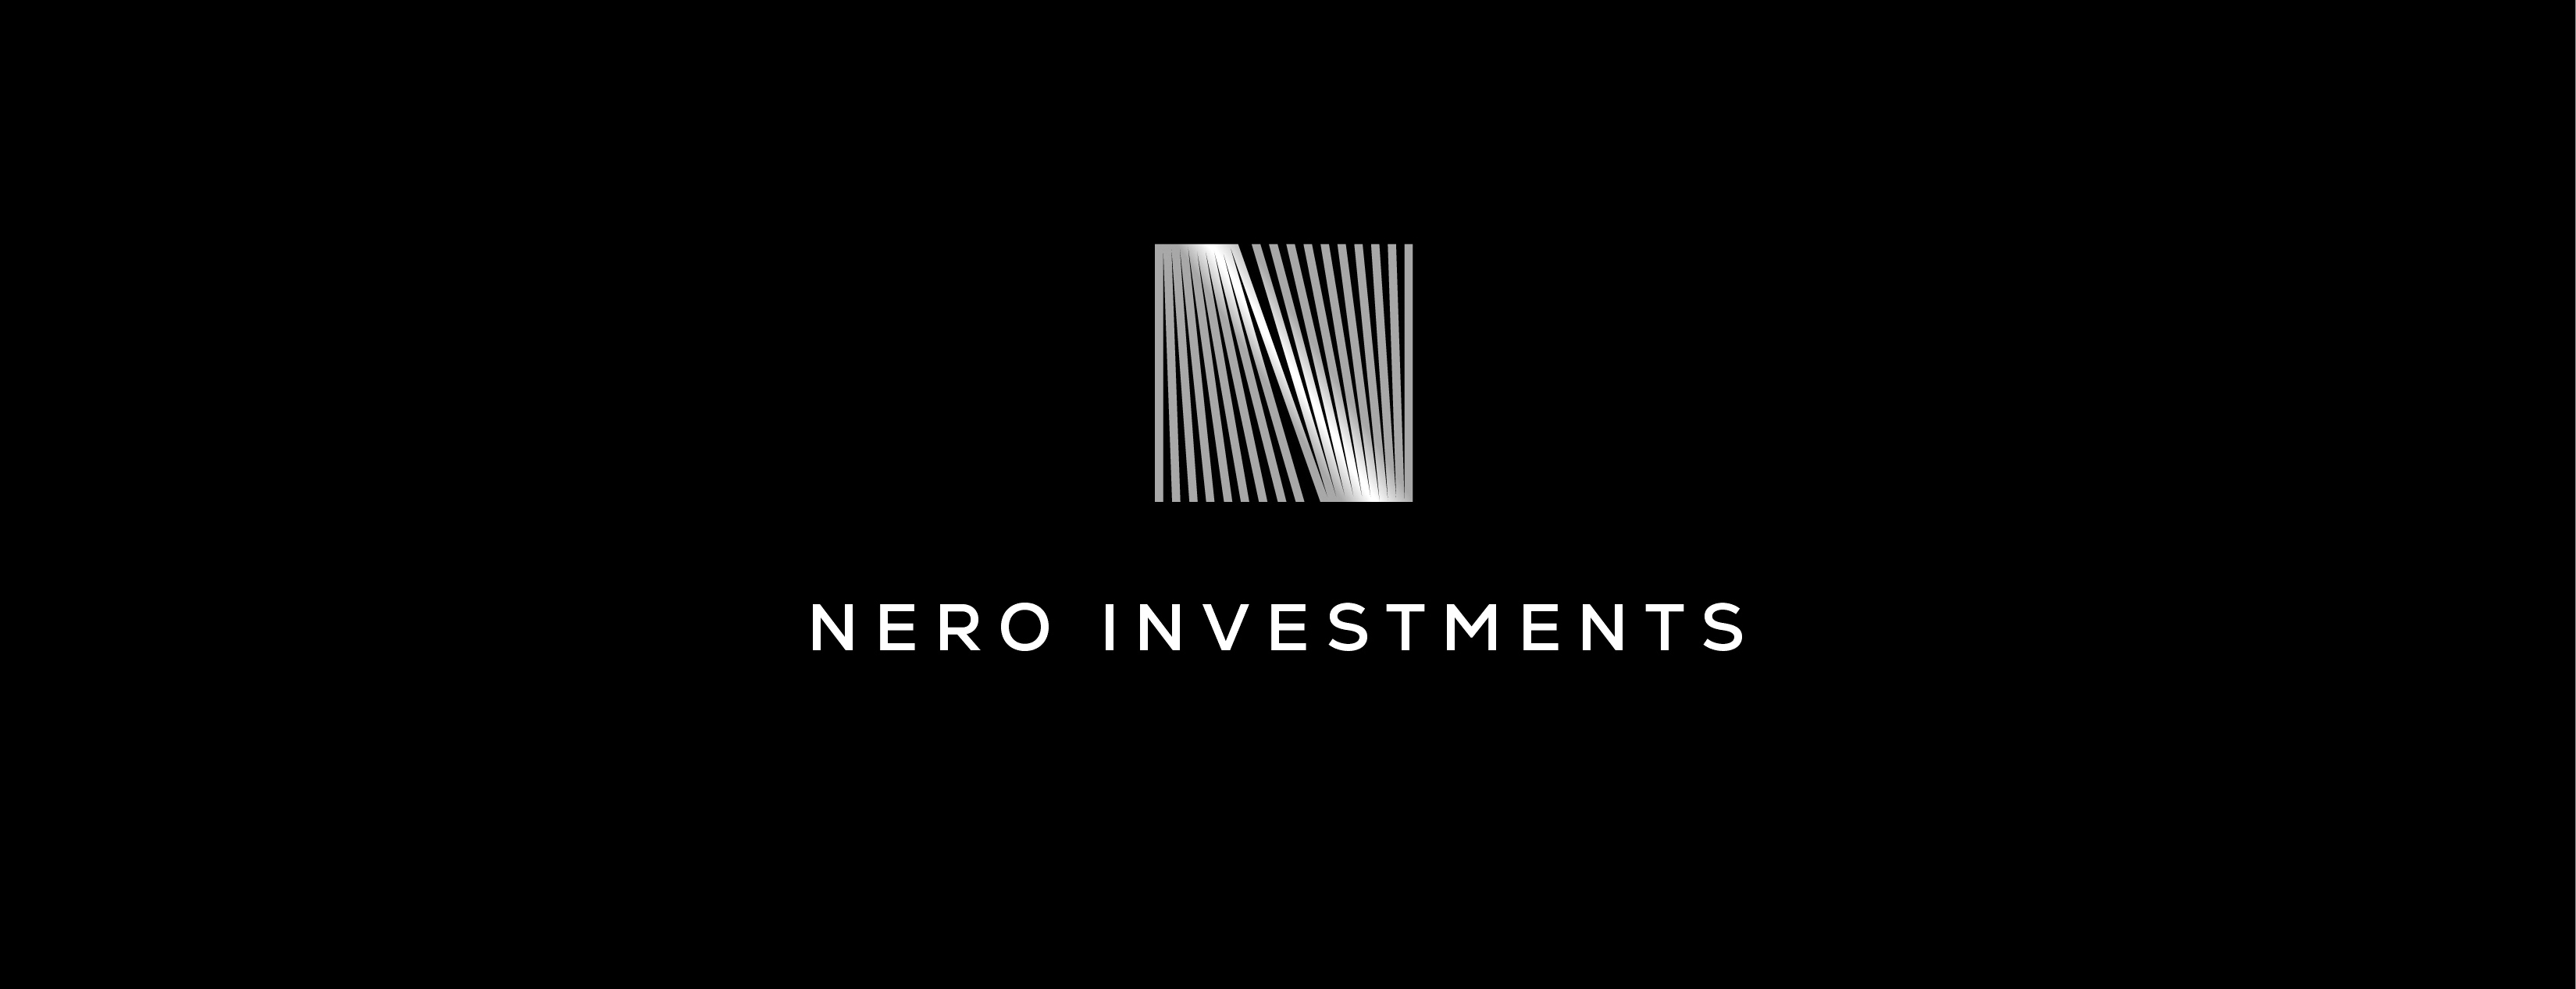 Nero Investments_Logo (1)1